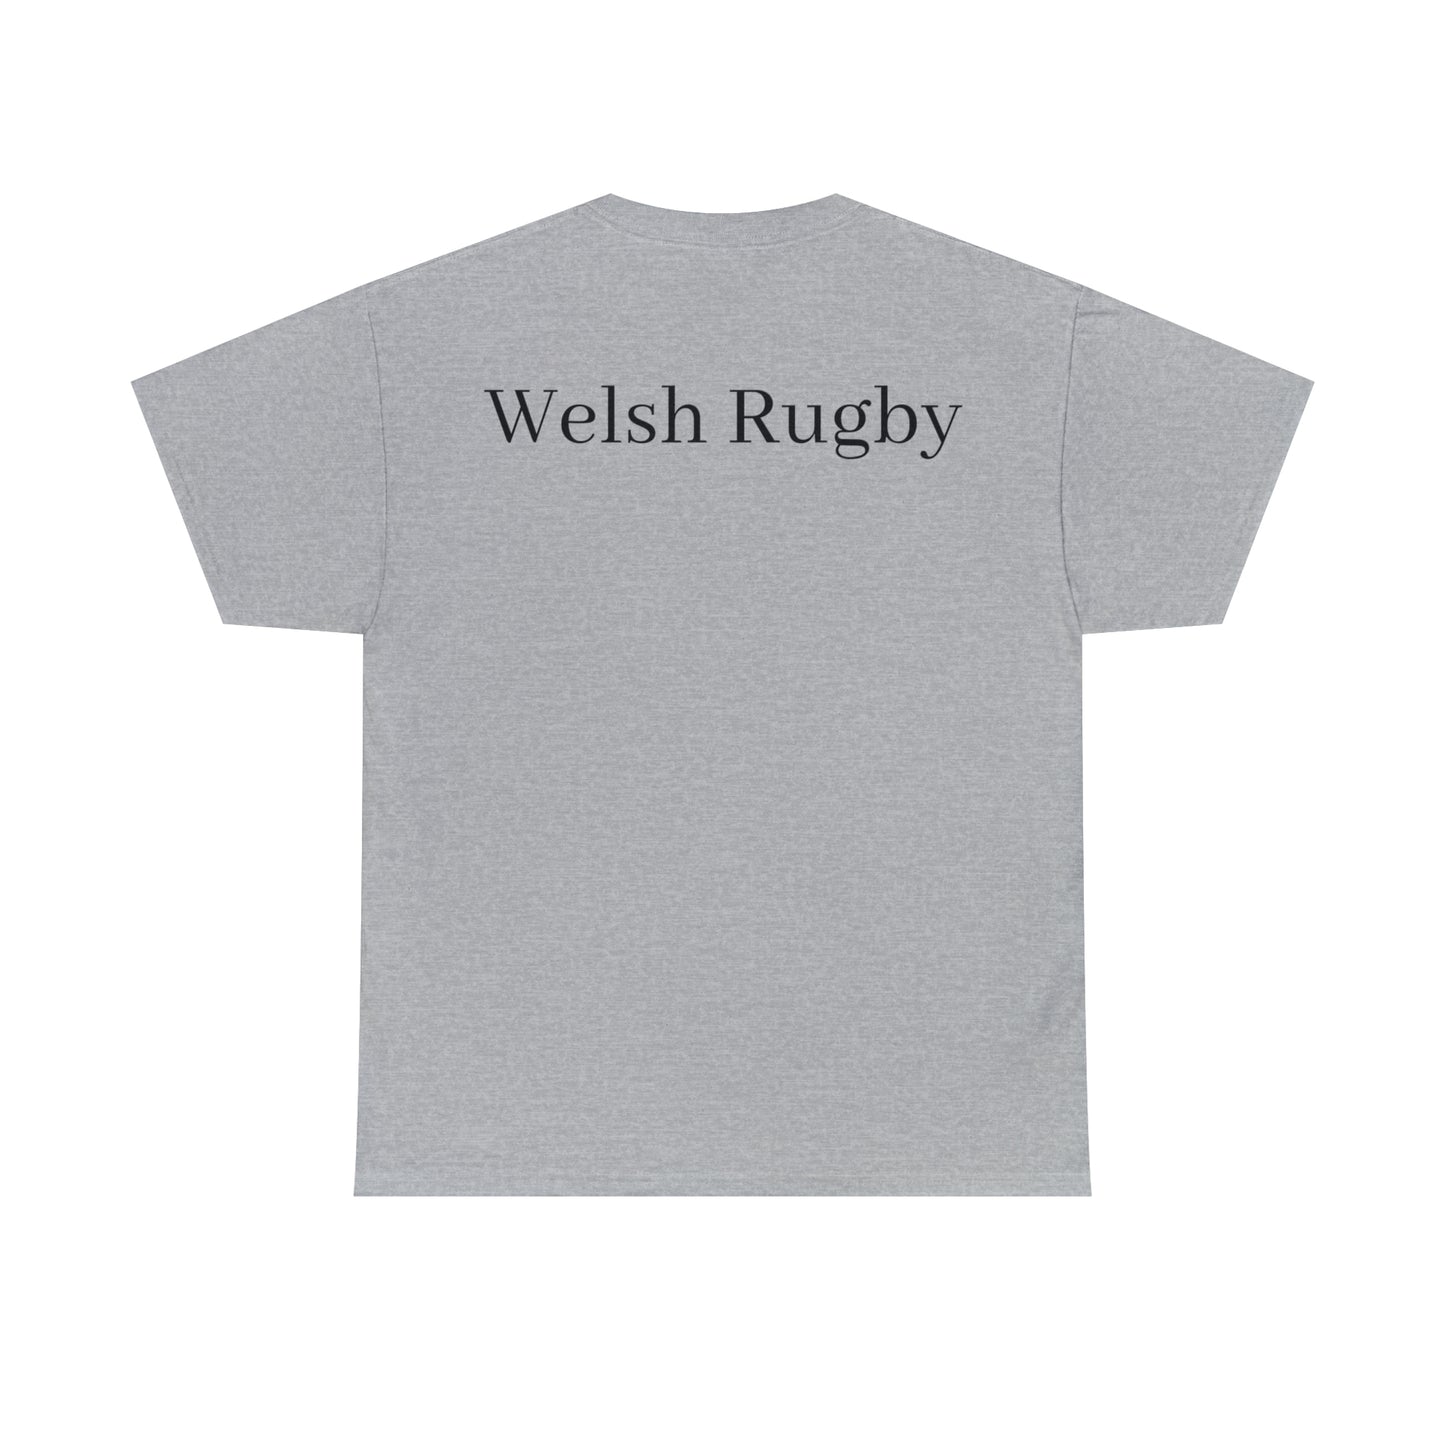 Wales Lifting RWC - light shirts